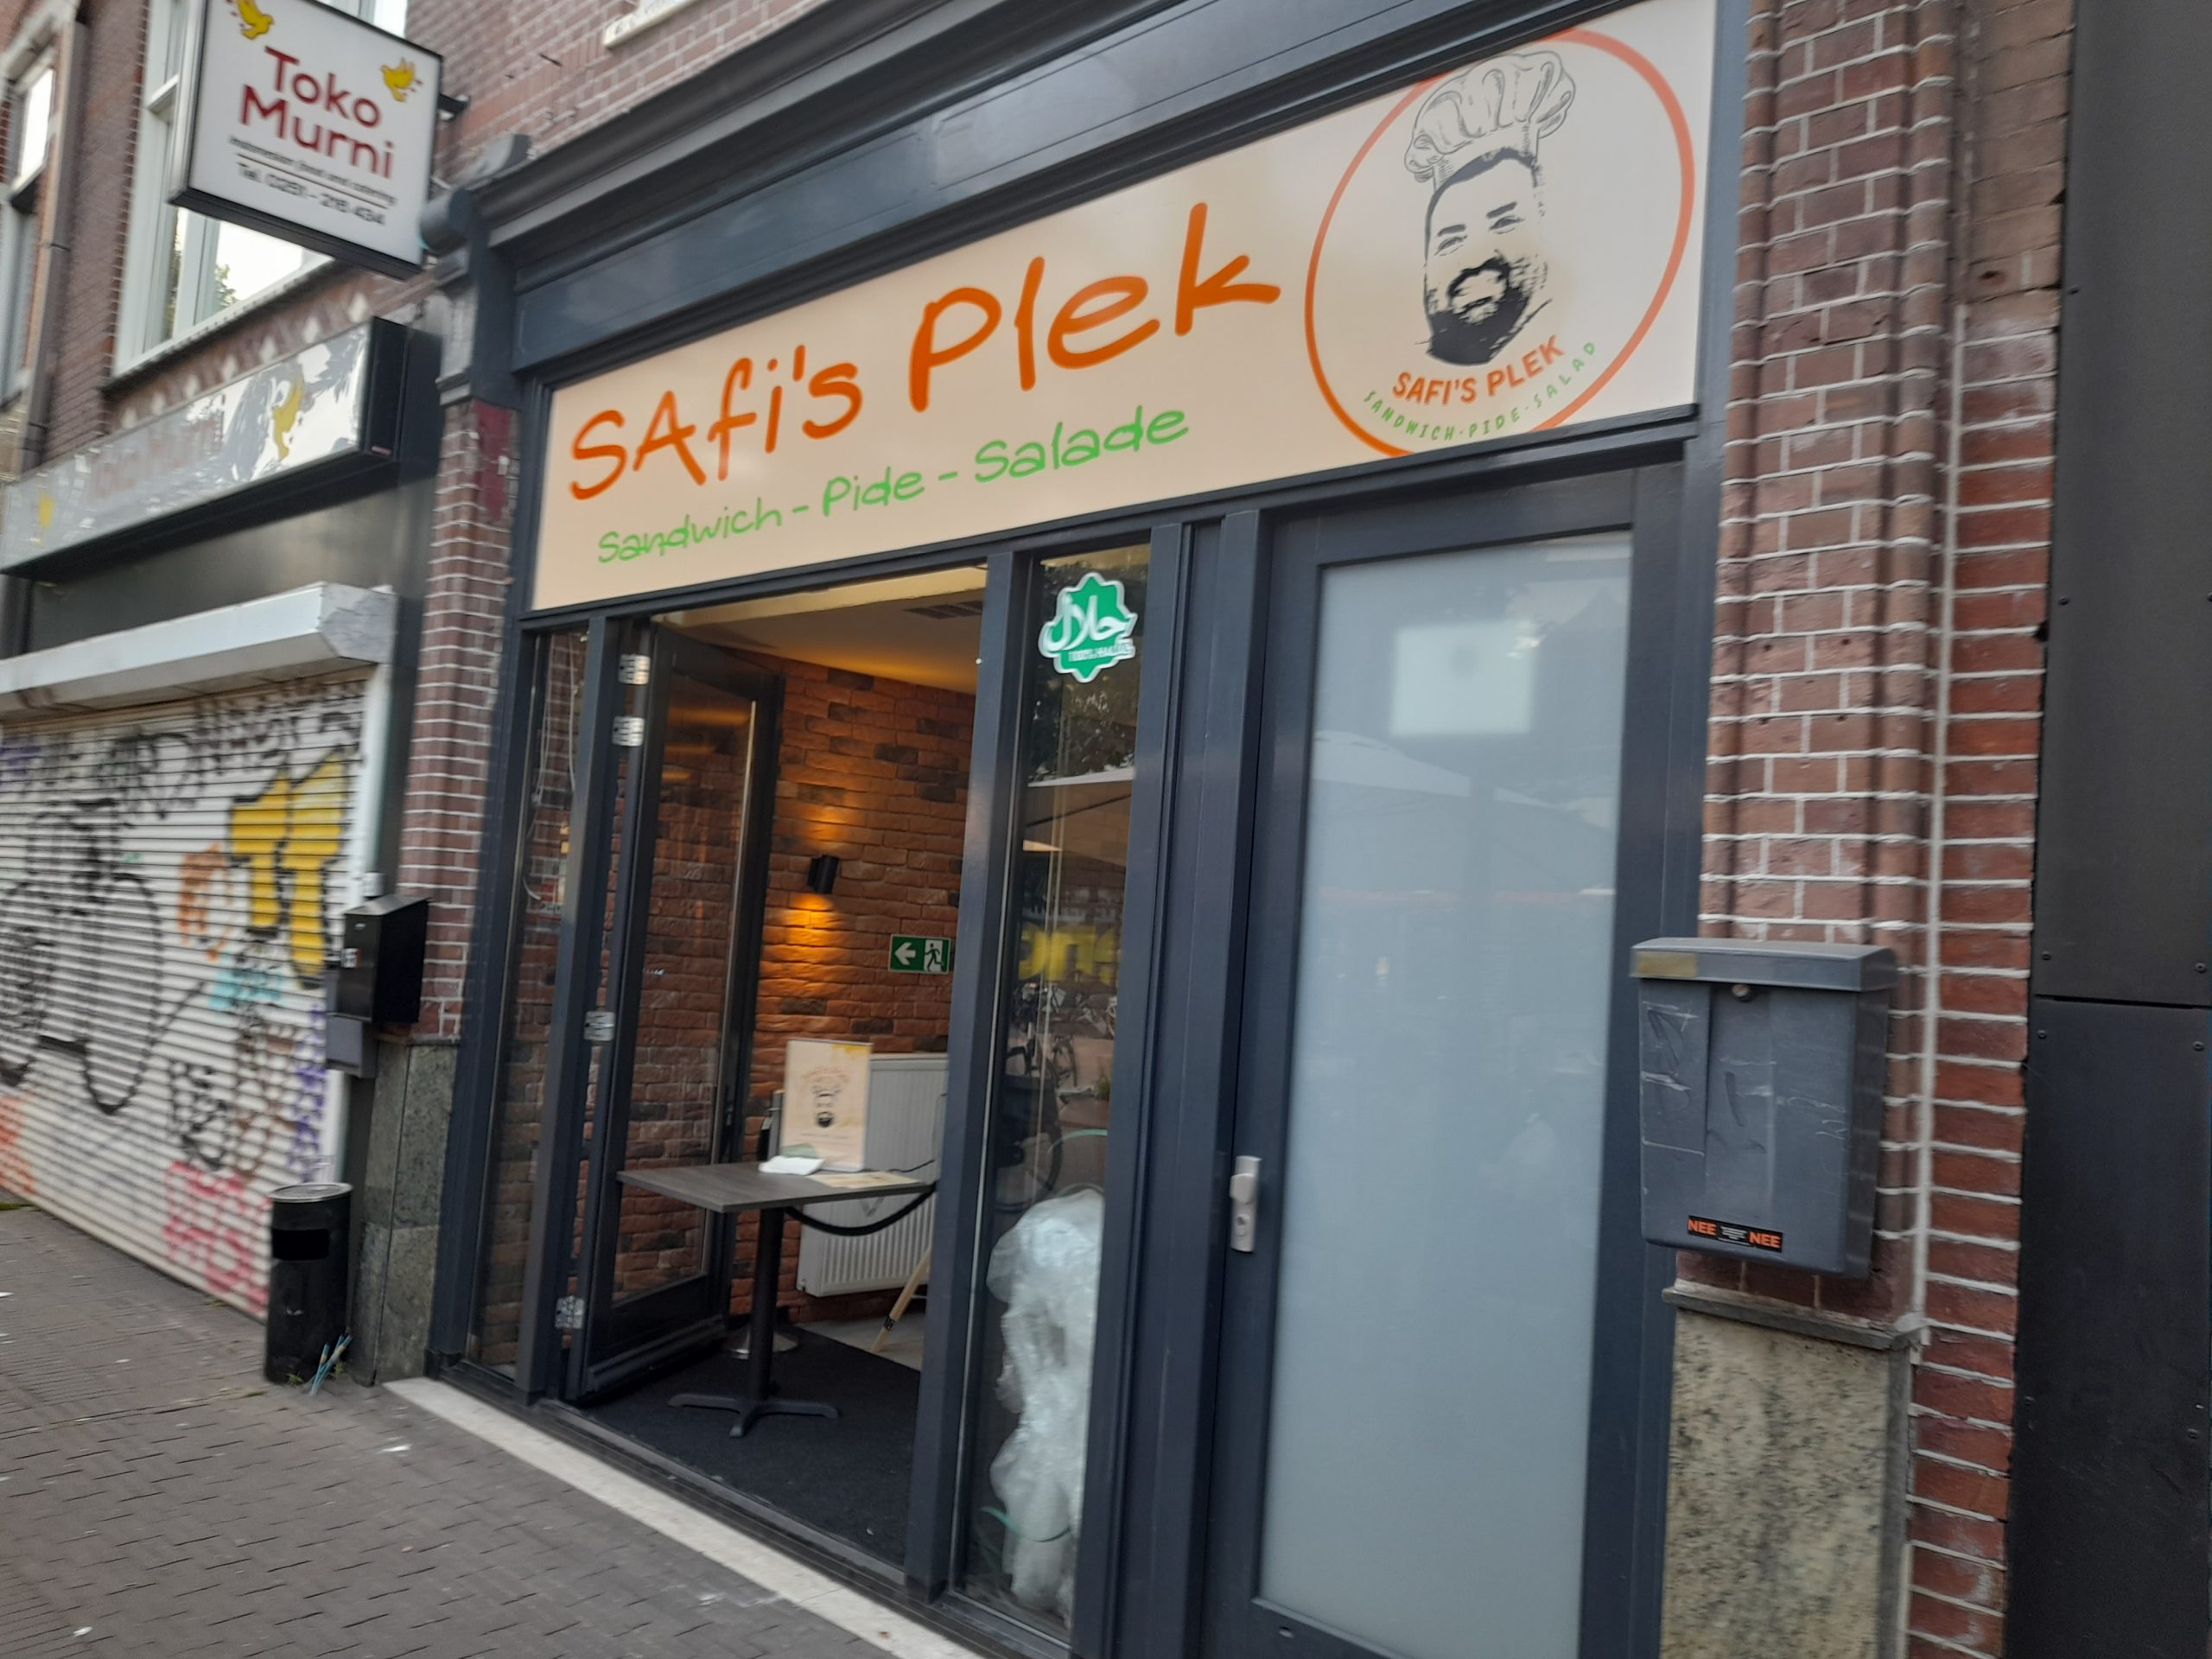 Safi’s Plek